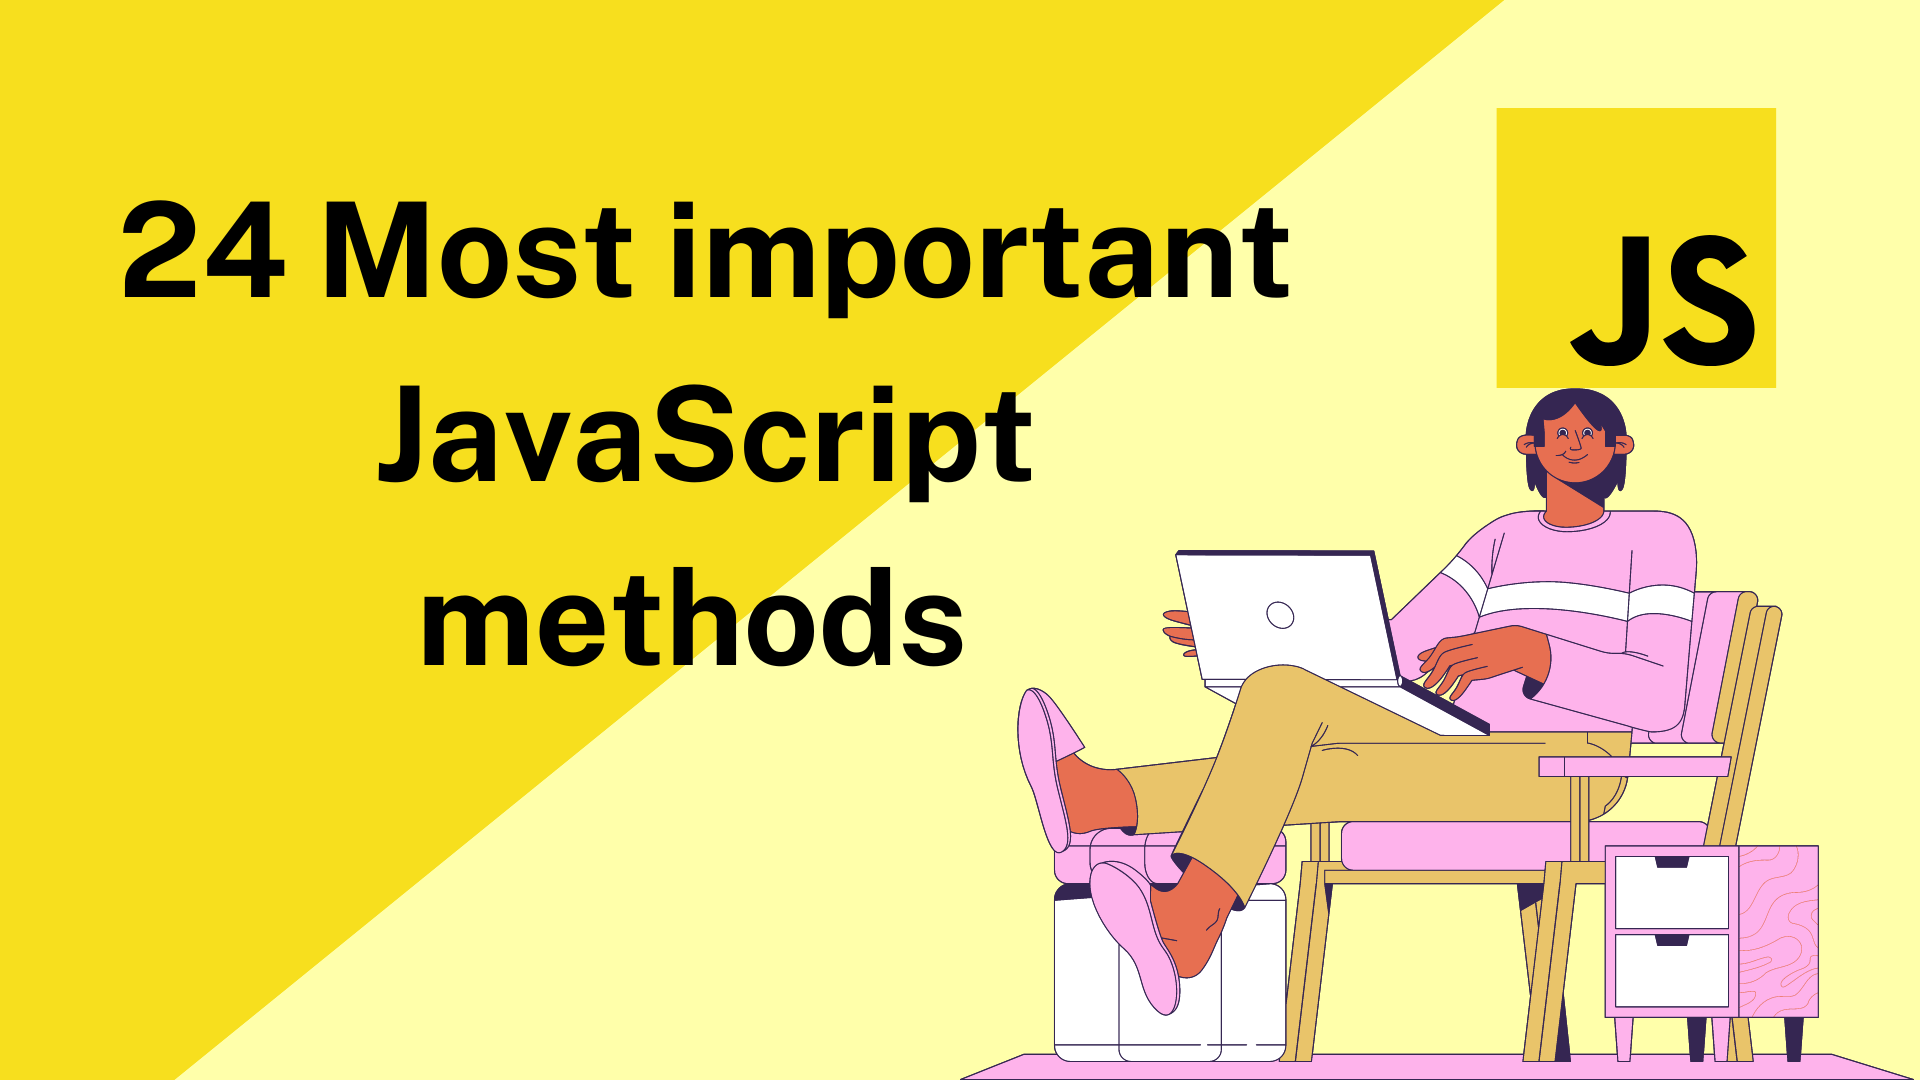 24 Most important JavaScript methods